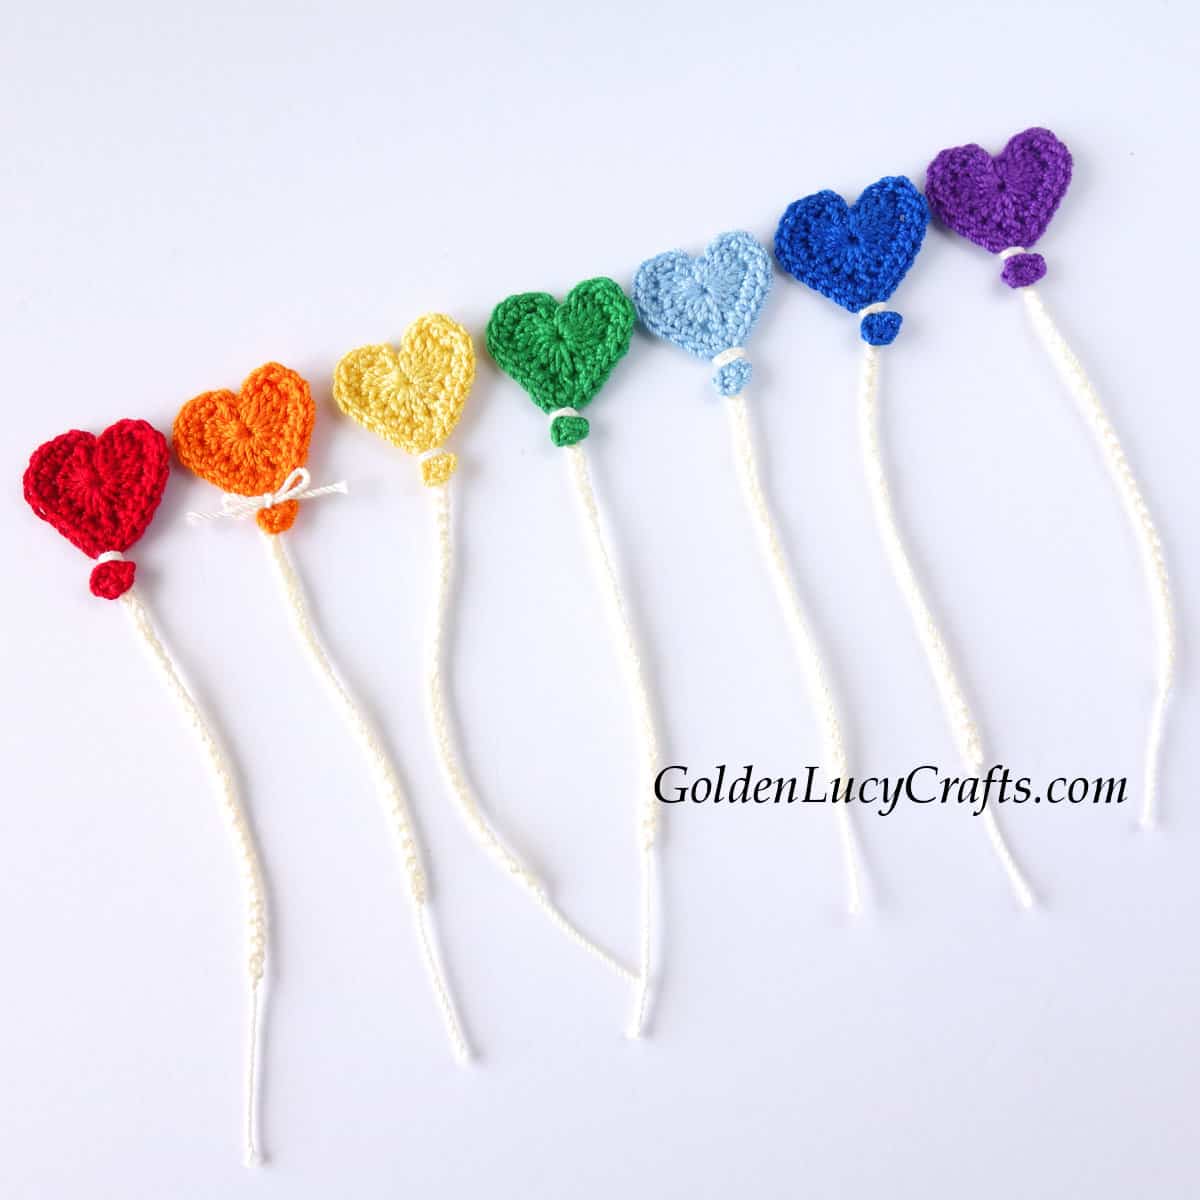 Crocheted heart balloons in rainbow colors.